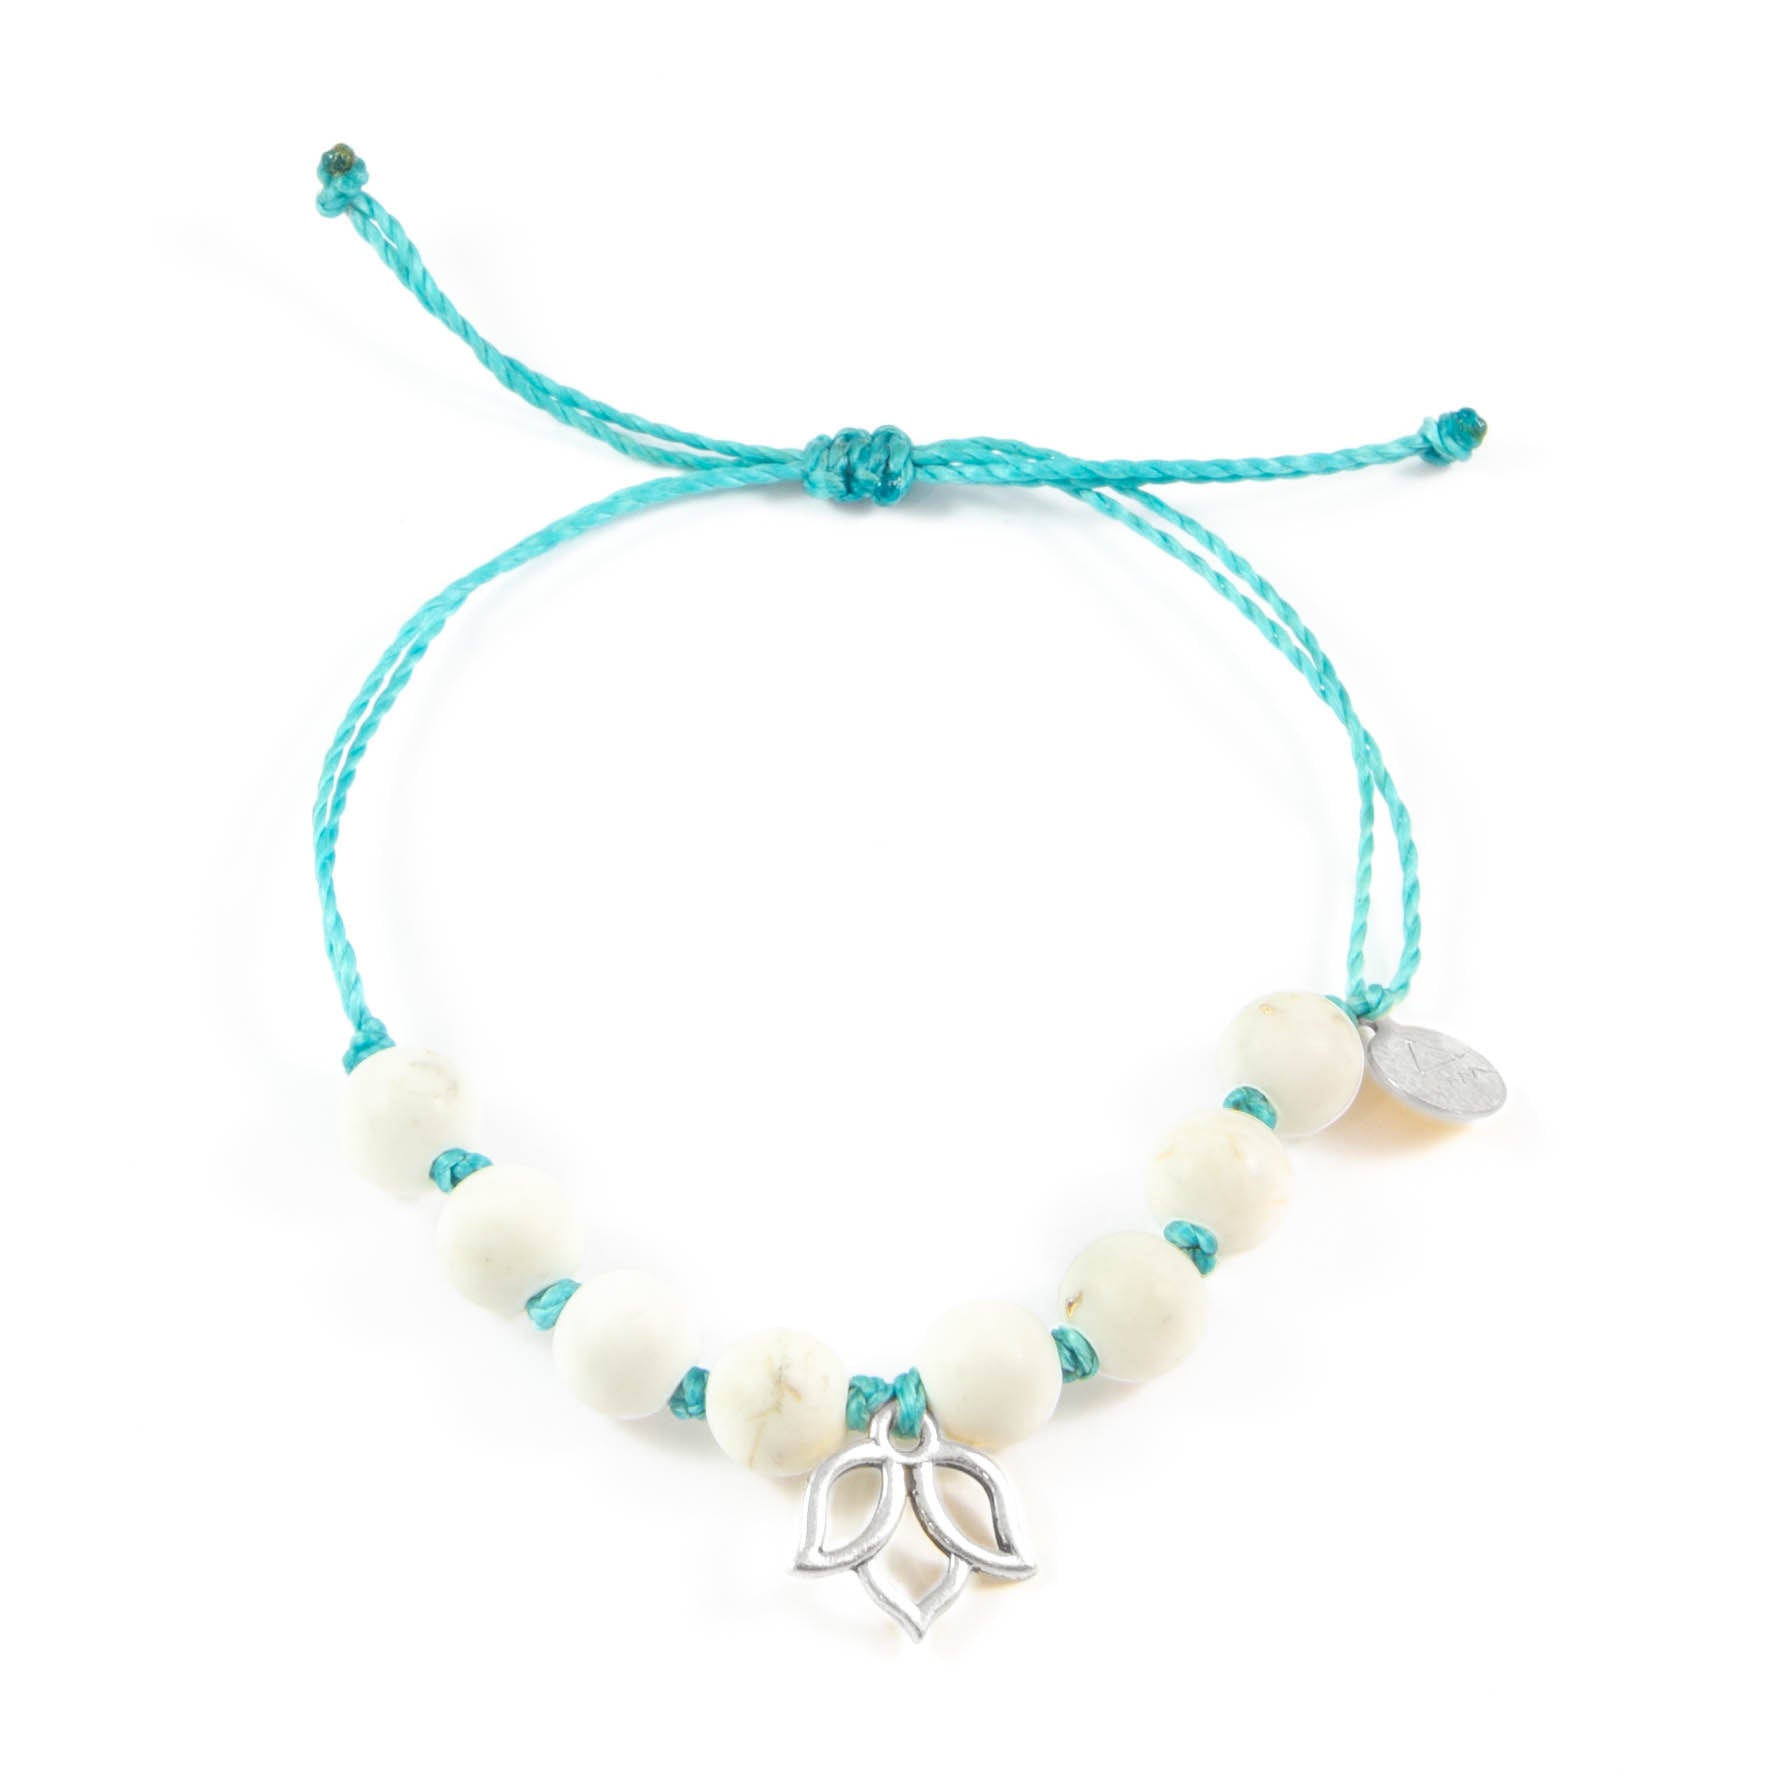 Teal & White Turquoise Lotus Flower Bracelet in Silver